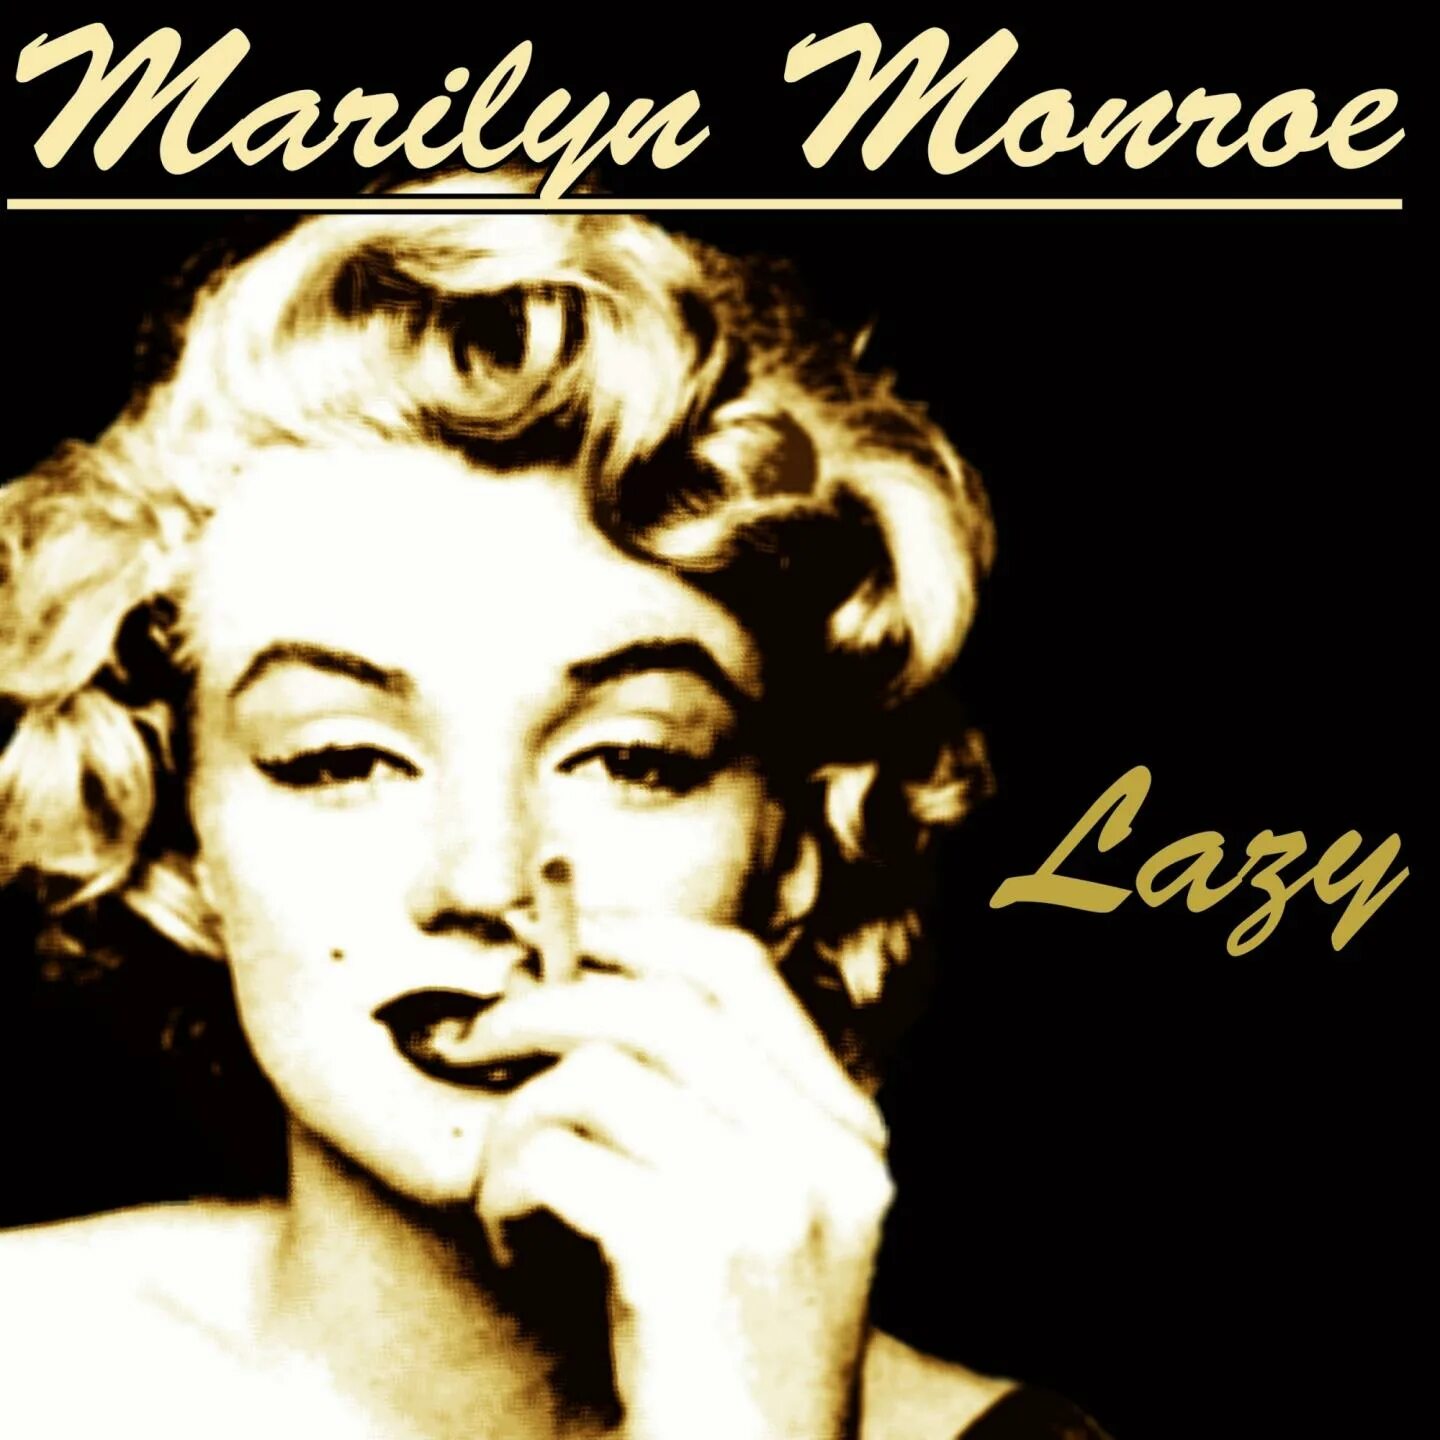 Песня мерлин монро слушать. Marilyn Monroe Lazy. Монро слушать. Песня Монро 4.